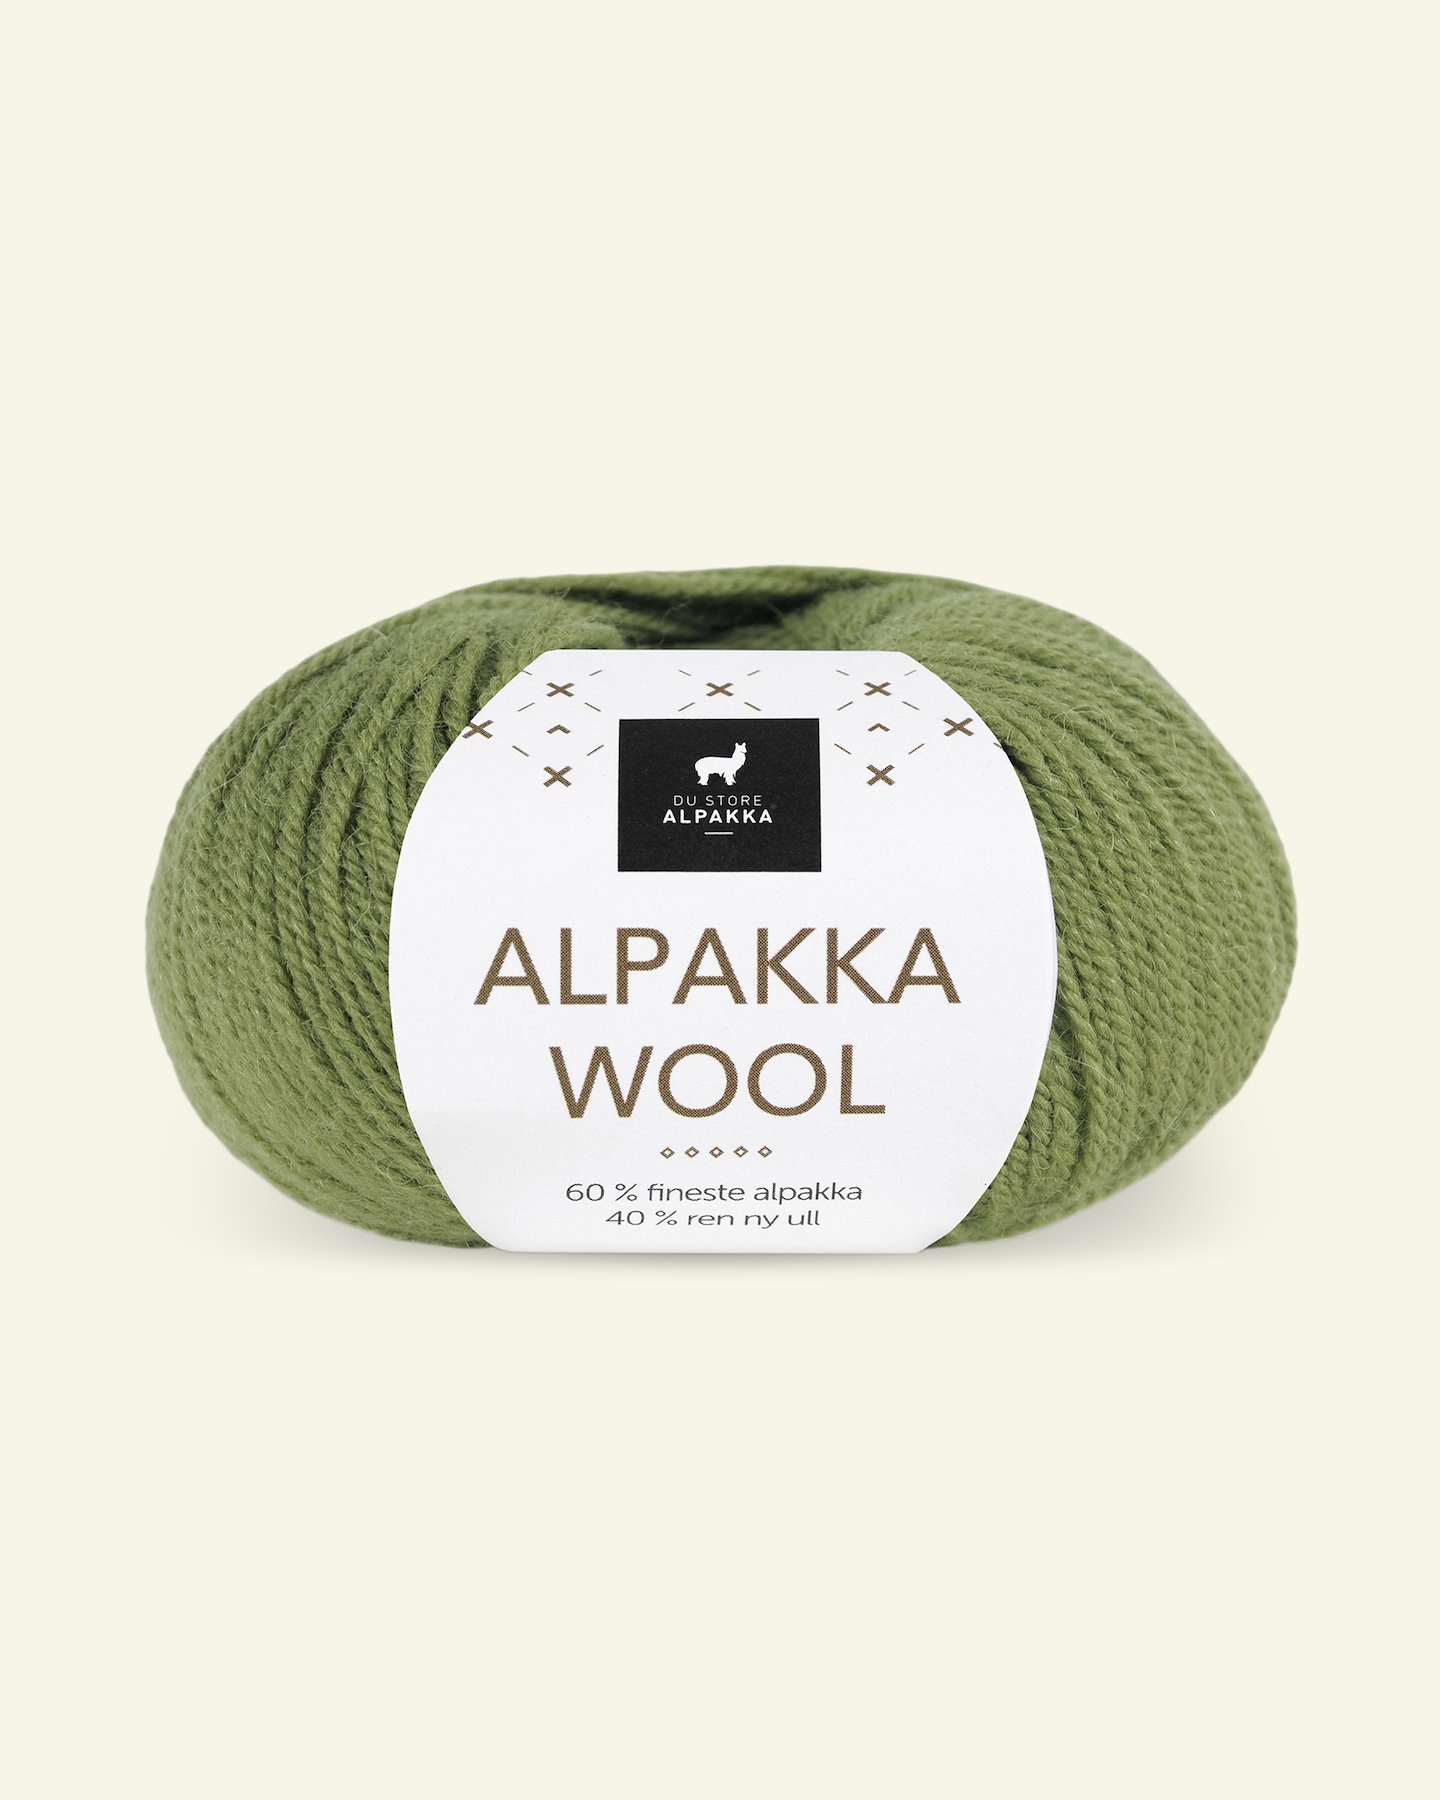 Du Store Alpakka, alpaca uldgarn "Alpakka Wool", grøn (518) 90000554_pack